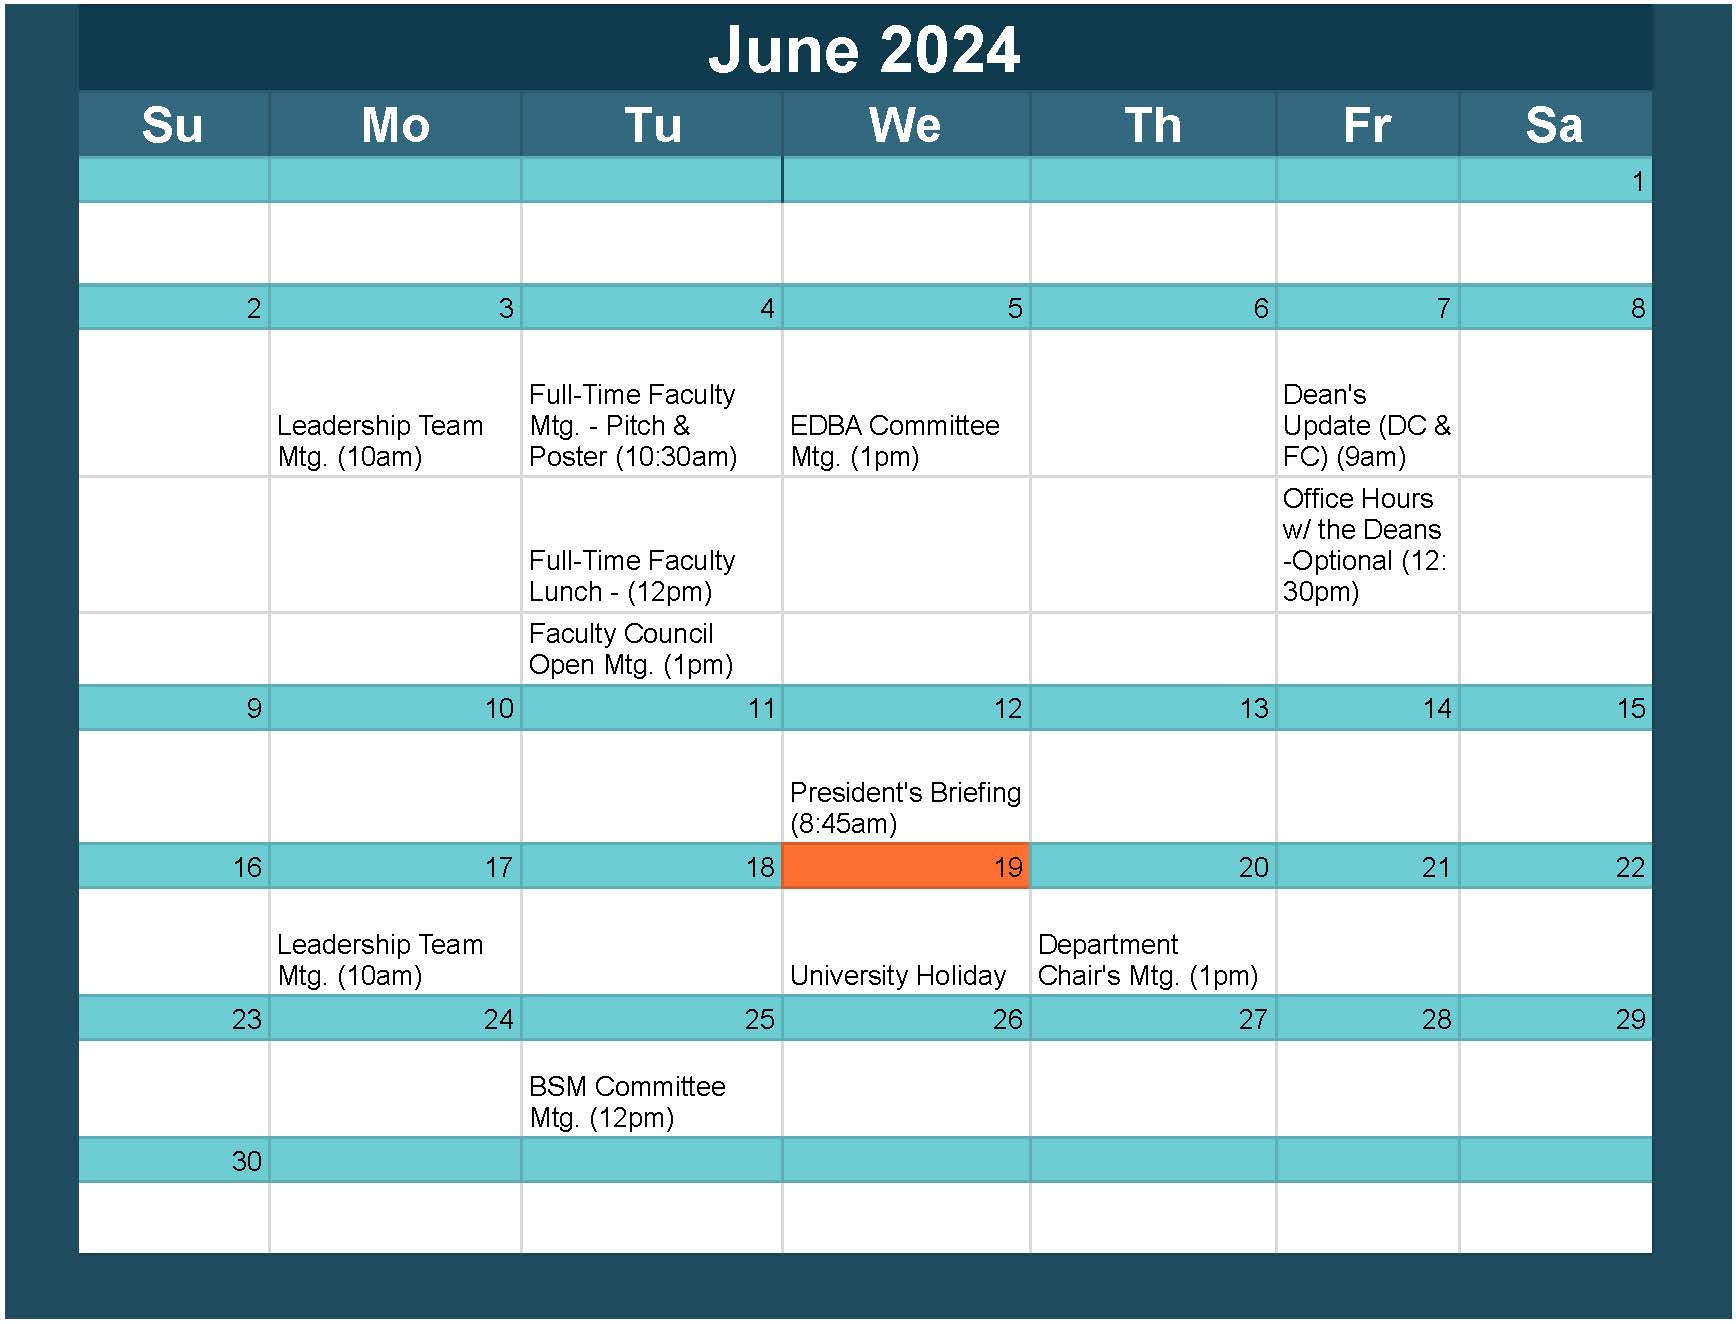 Faculty Calendar